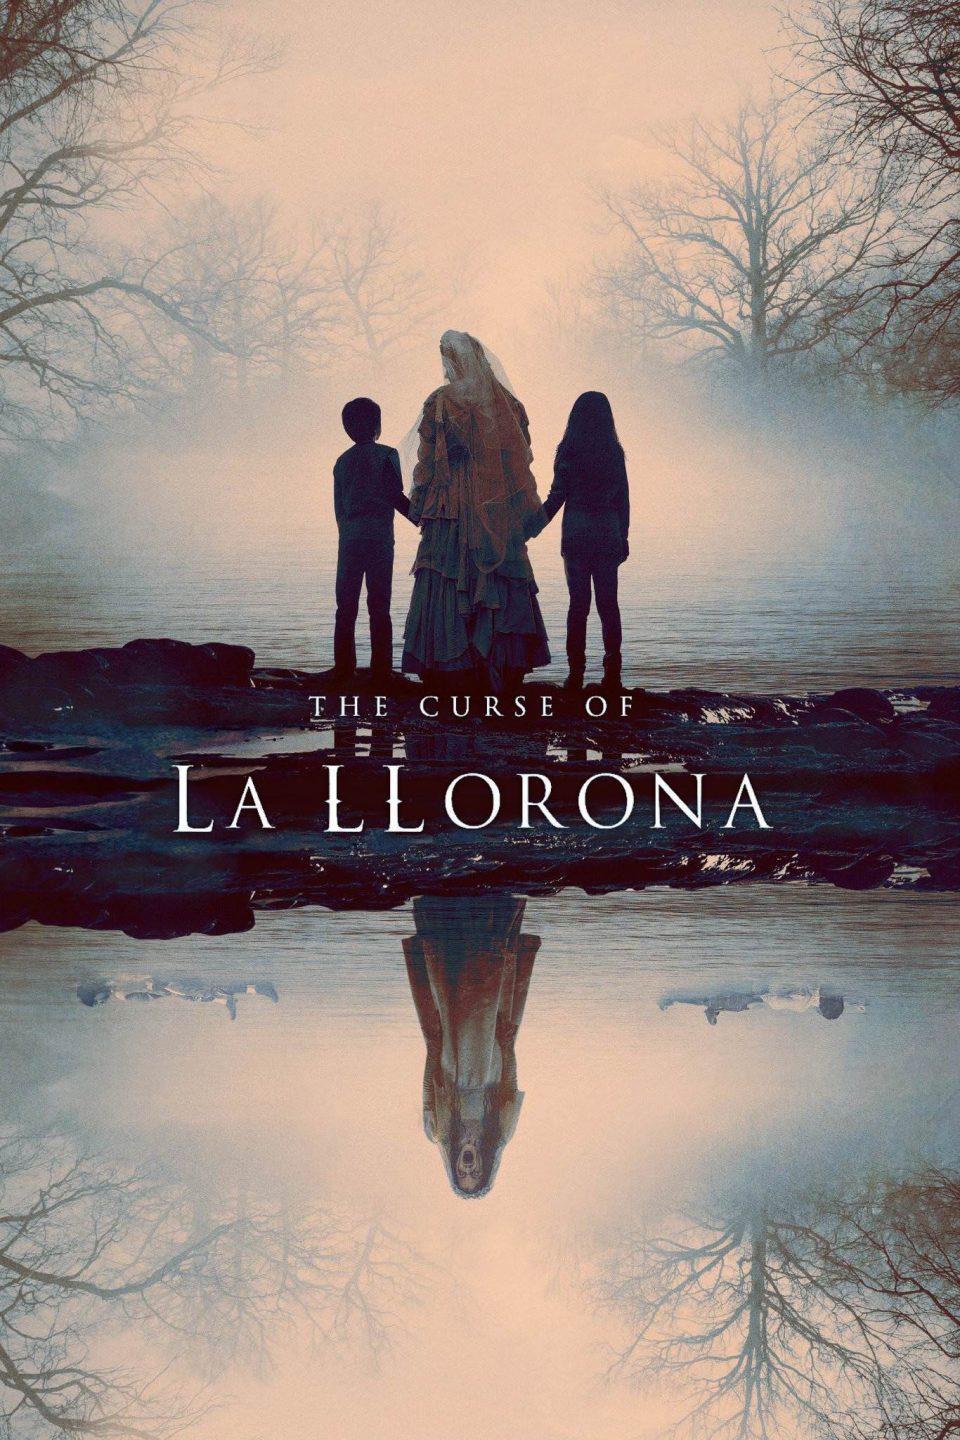 Poster for the movie "The Curse of La Llorona"